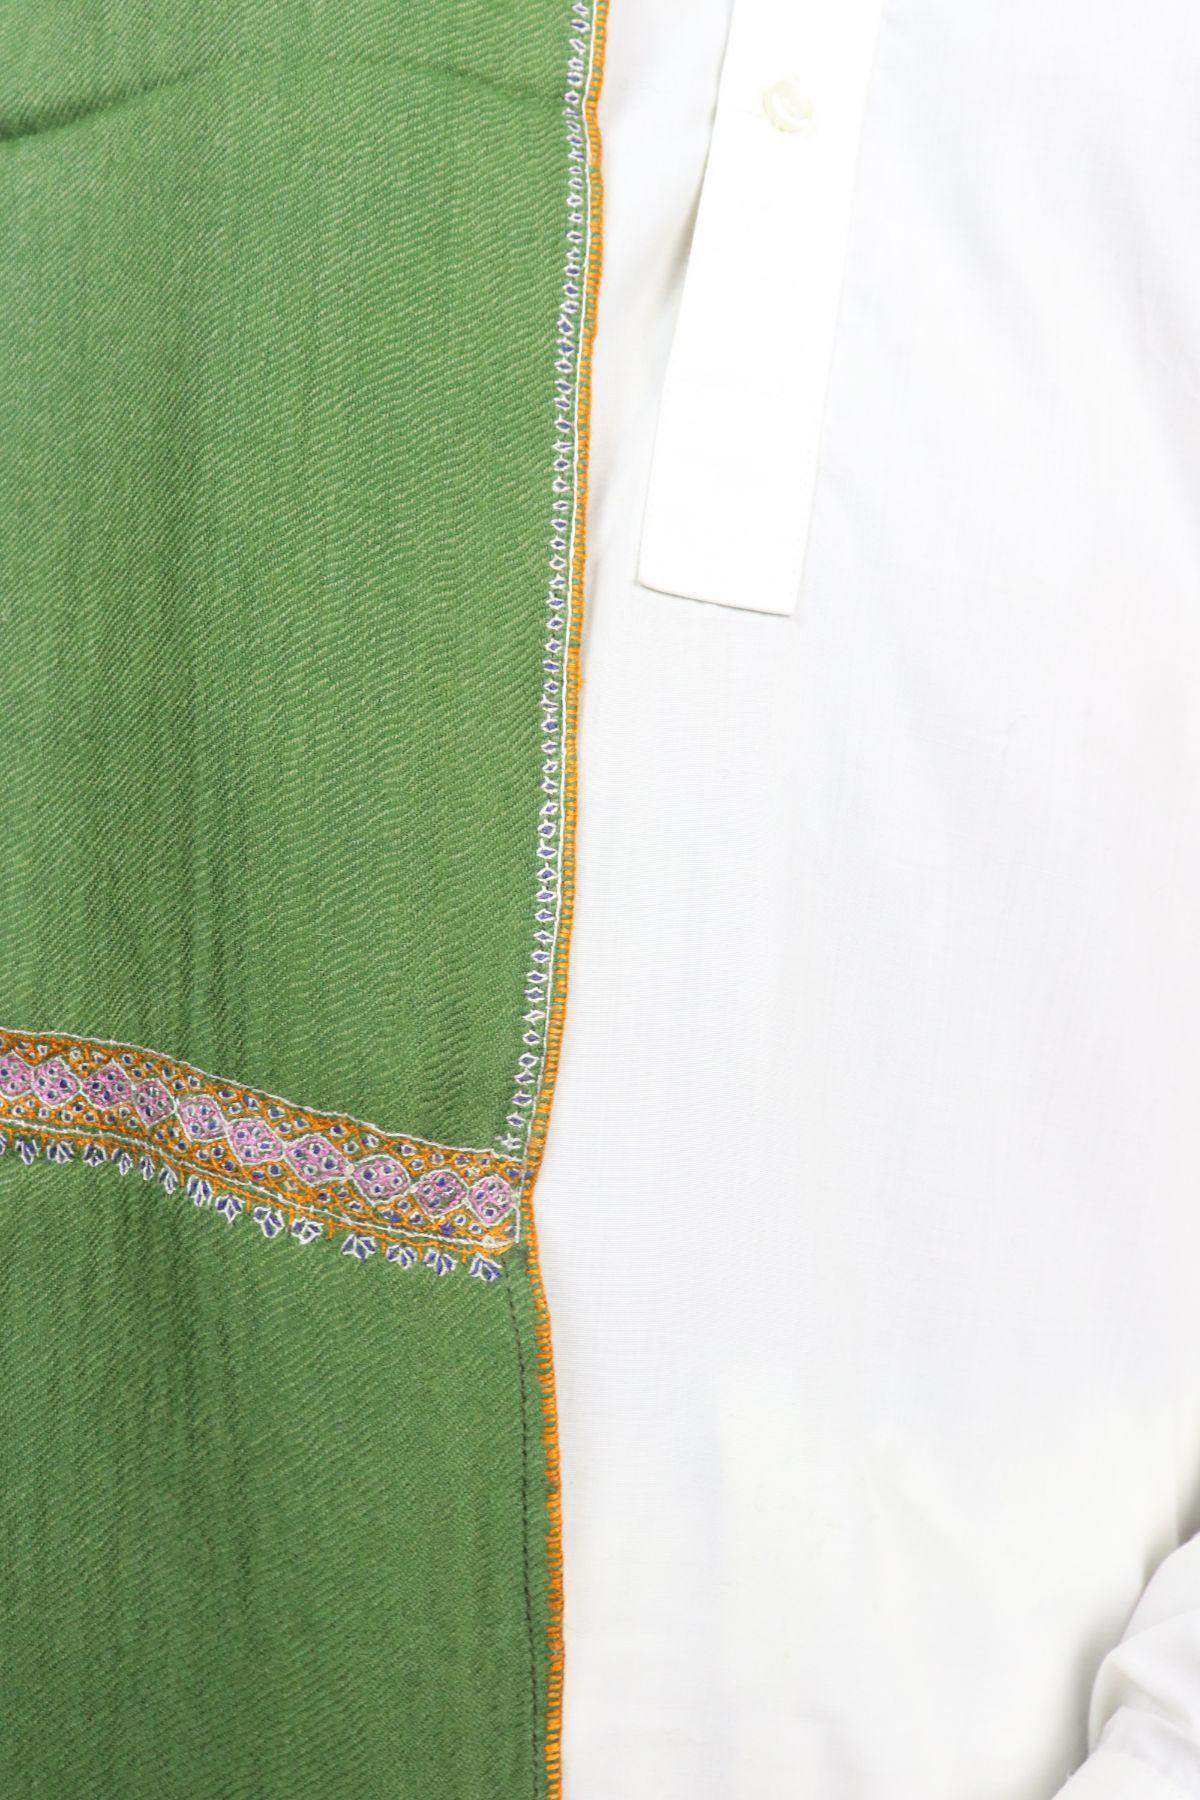 Handmade Pure Pashmina Hashia Embroidered Muffler Unisex - Green-Zooni | Kashmir Originals-handmade,Men,Muffler,Pashmina